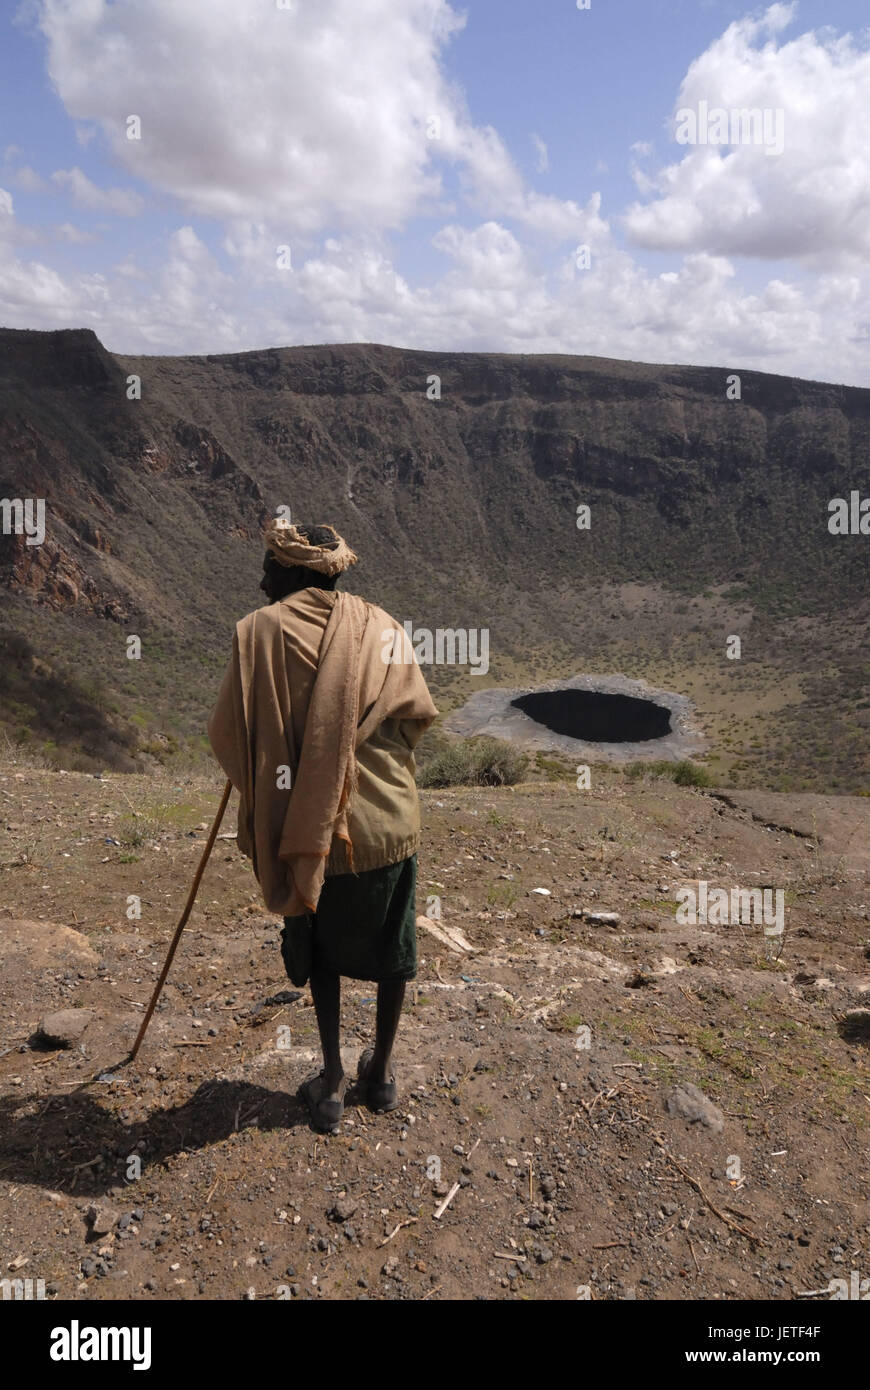 Man, old, el Sod crater, salt lake, Ethiopia, Stock Photo